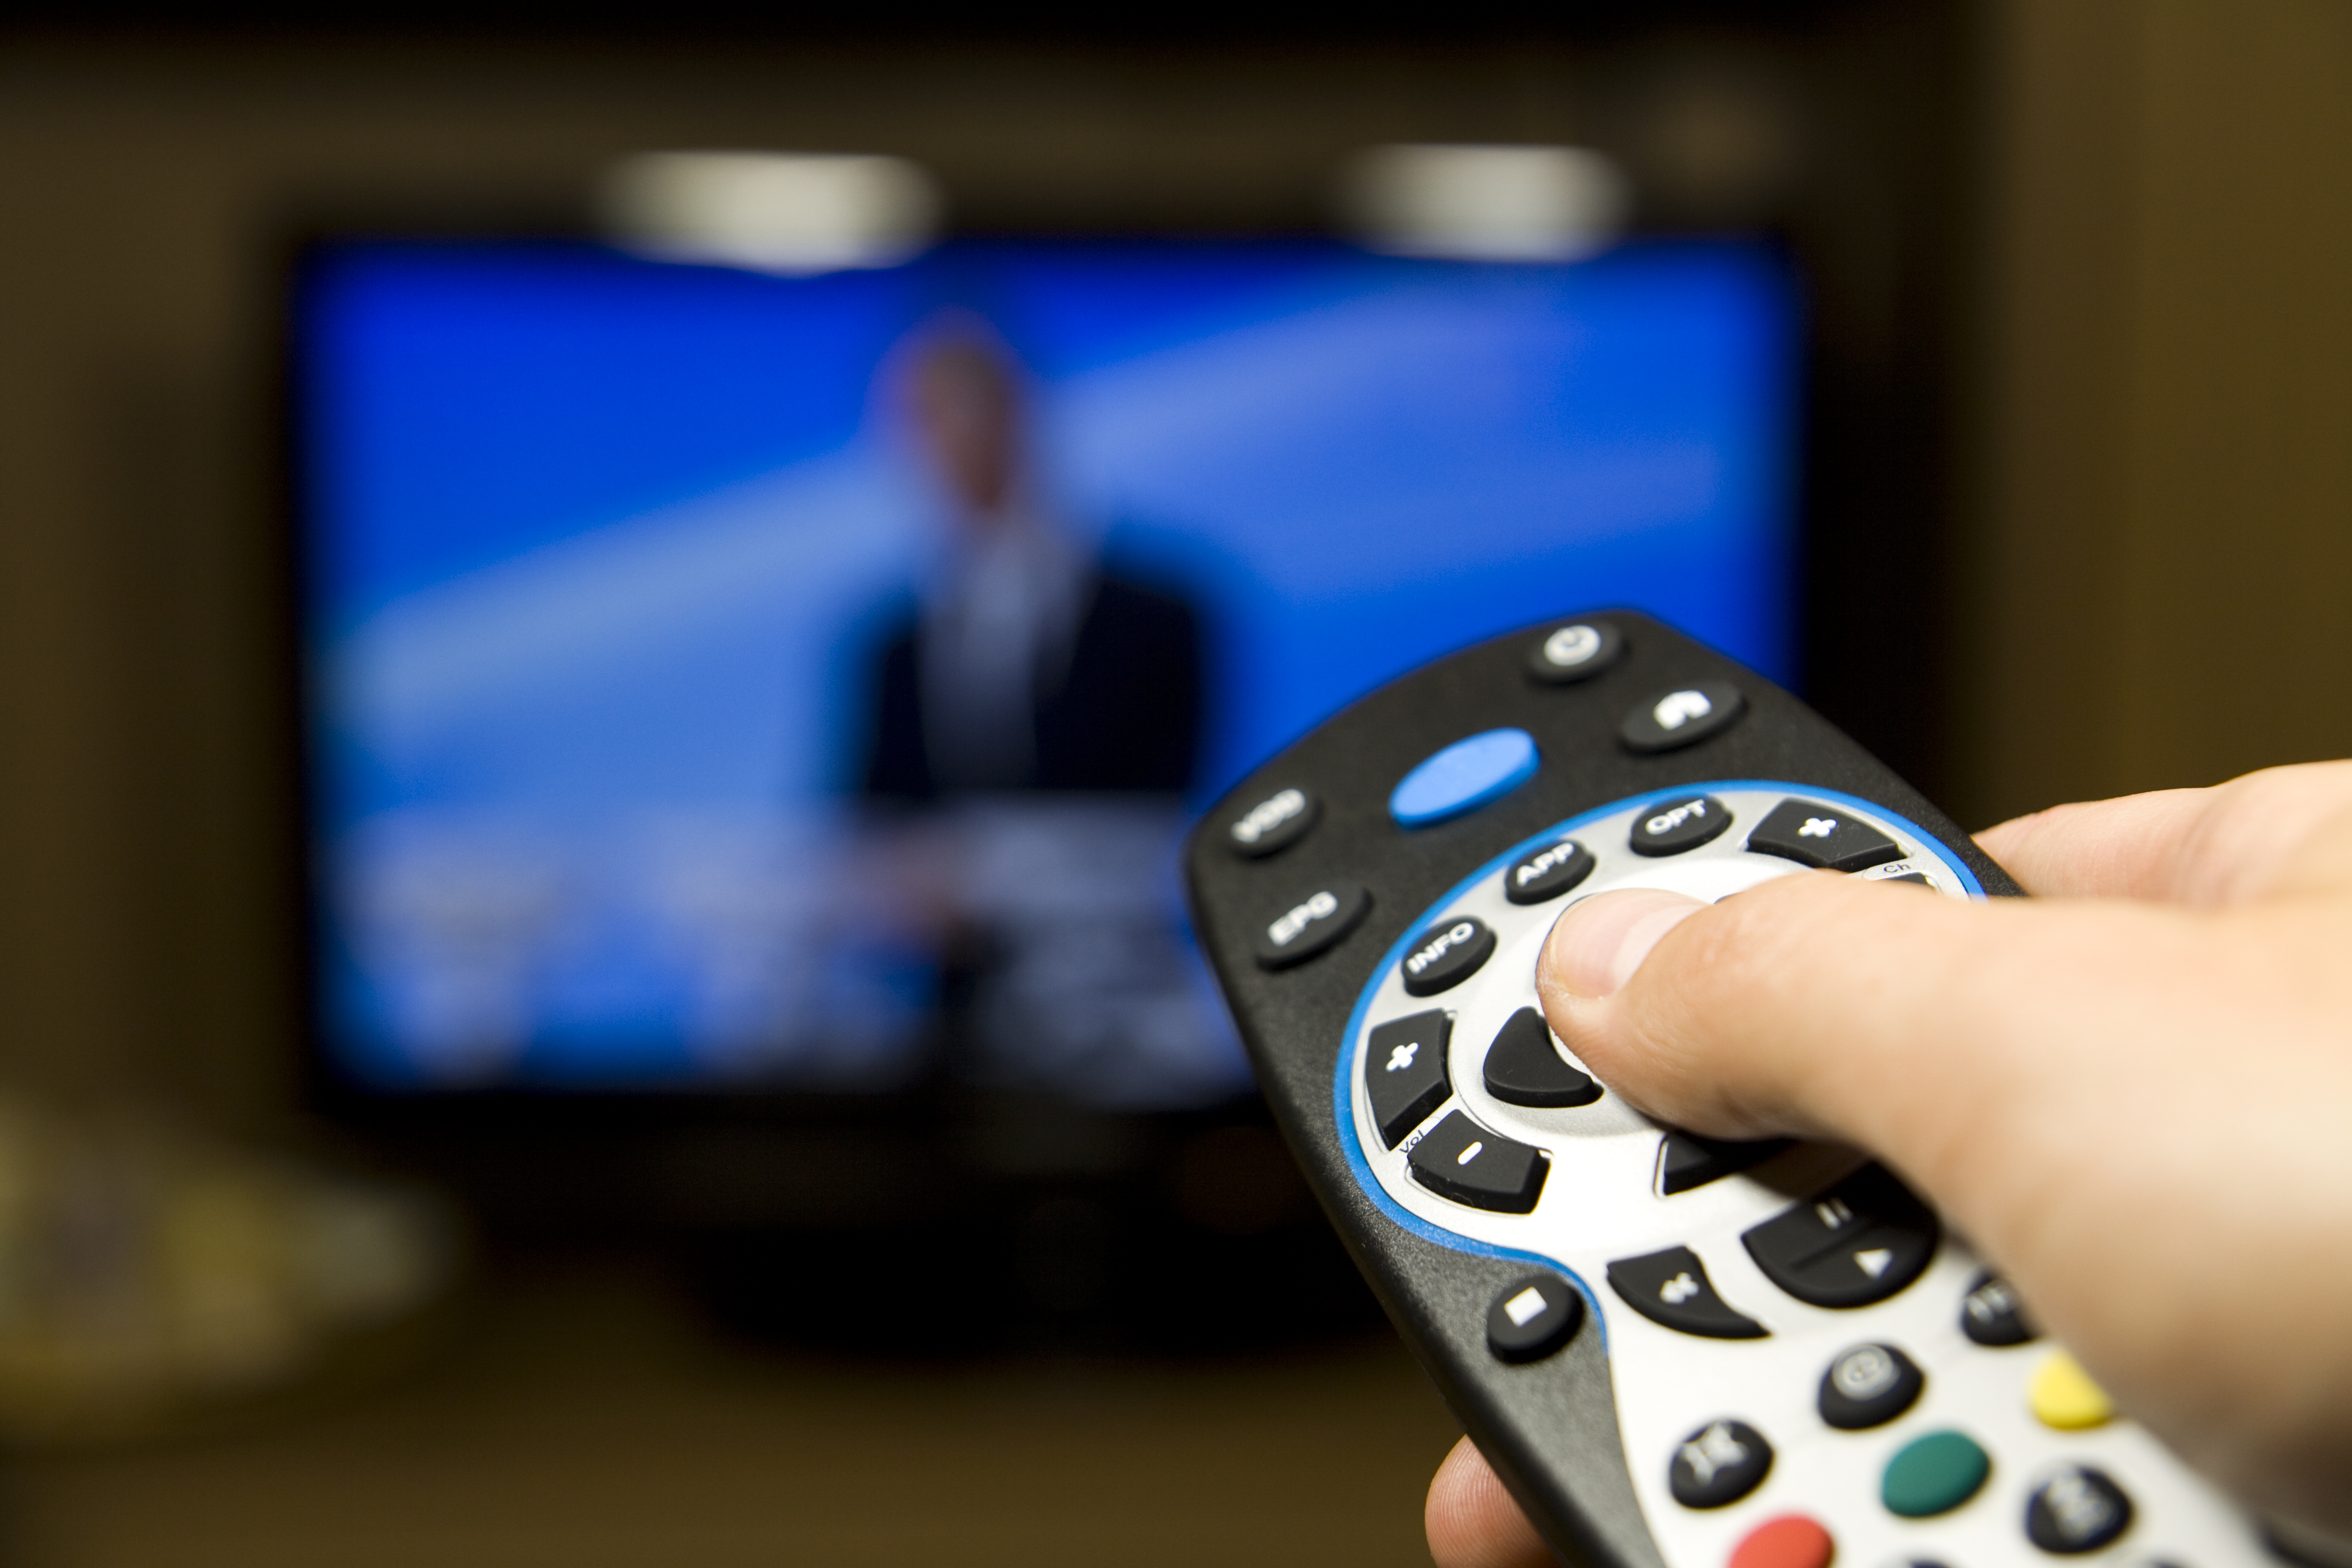 Televisión nicaragüense regresa al cable “tras seis días censurado”